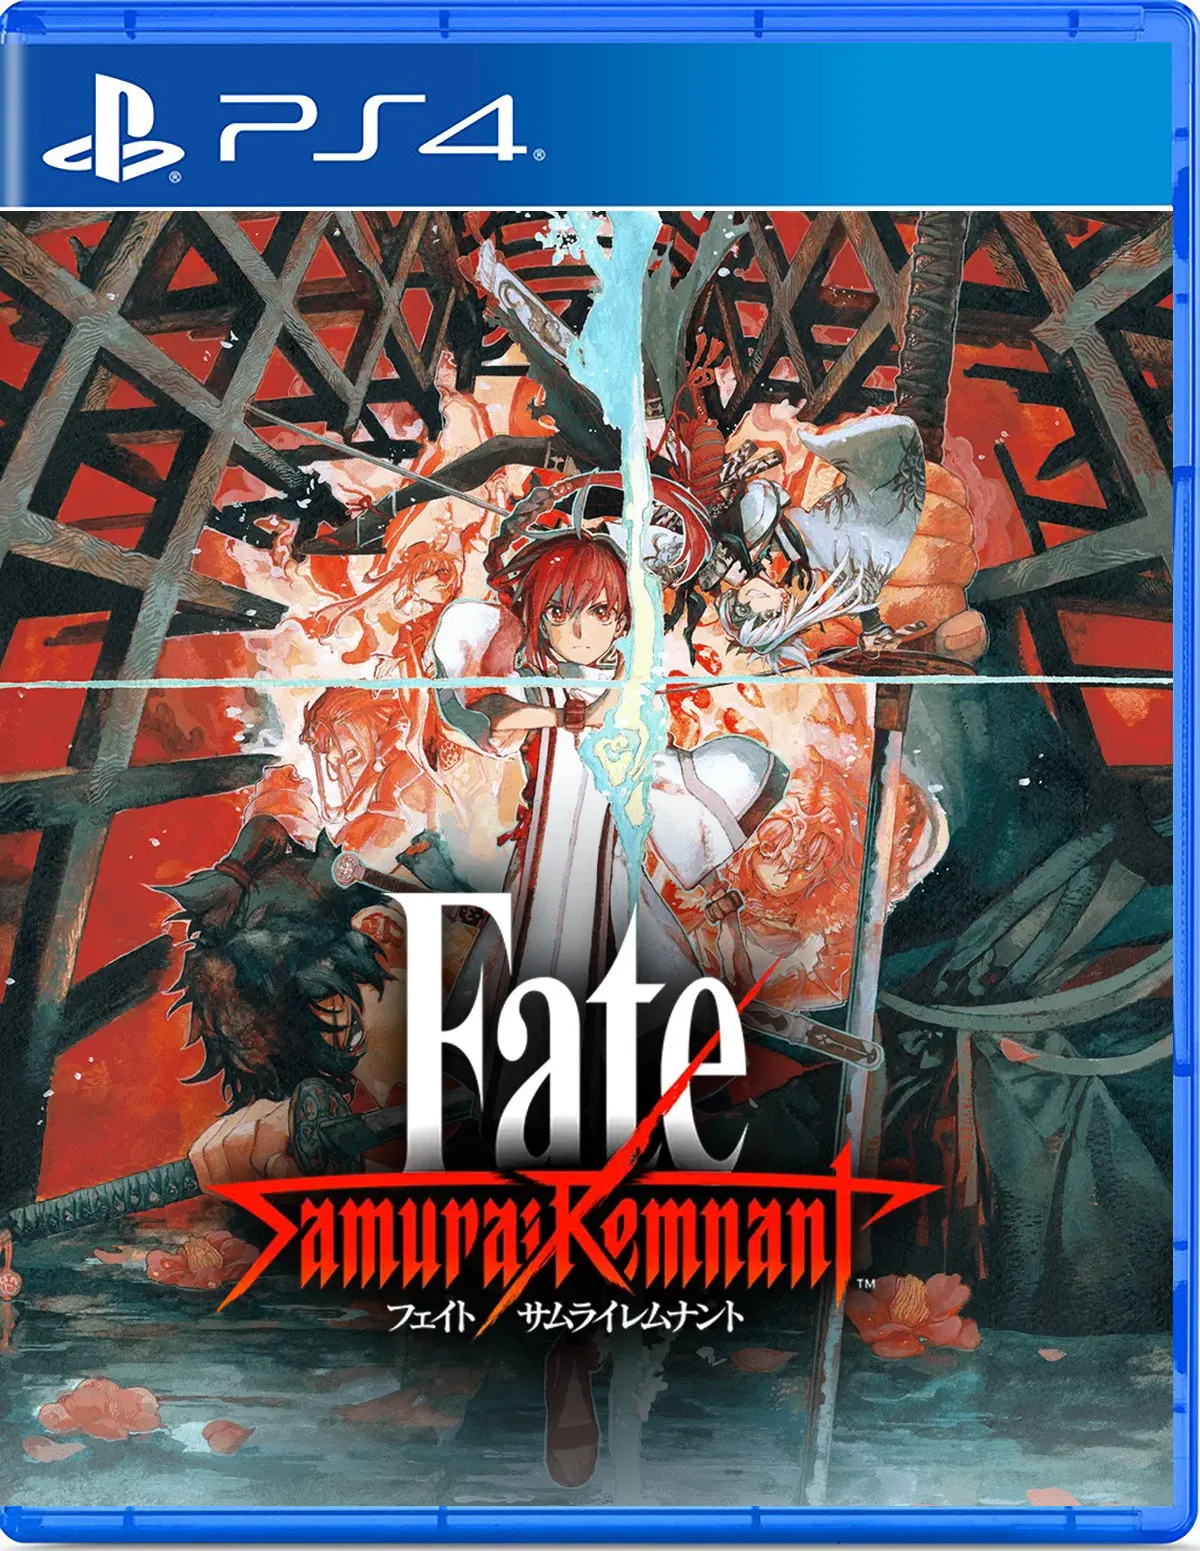 PS5 Fate/Samurai Remnant 通常版 サムライレムナント家庭用ゲーム 